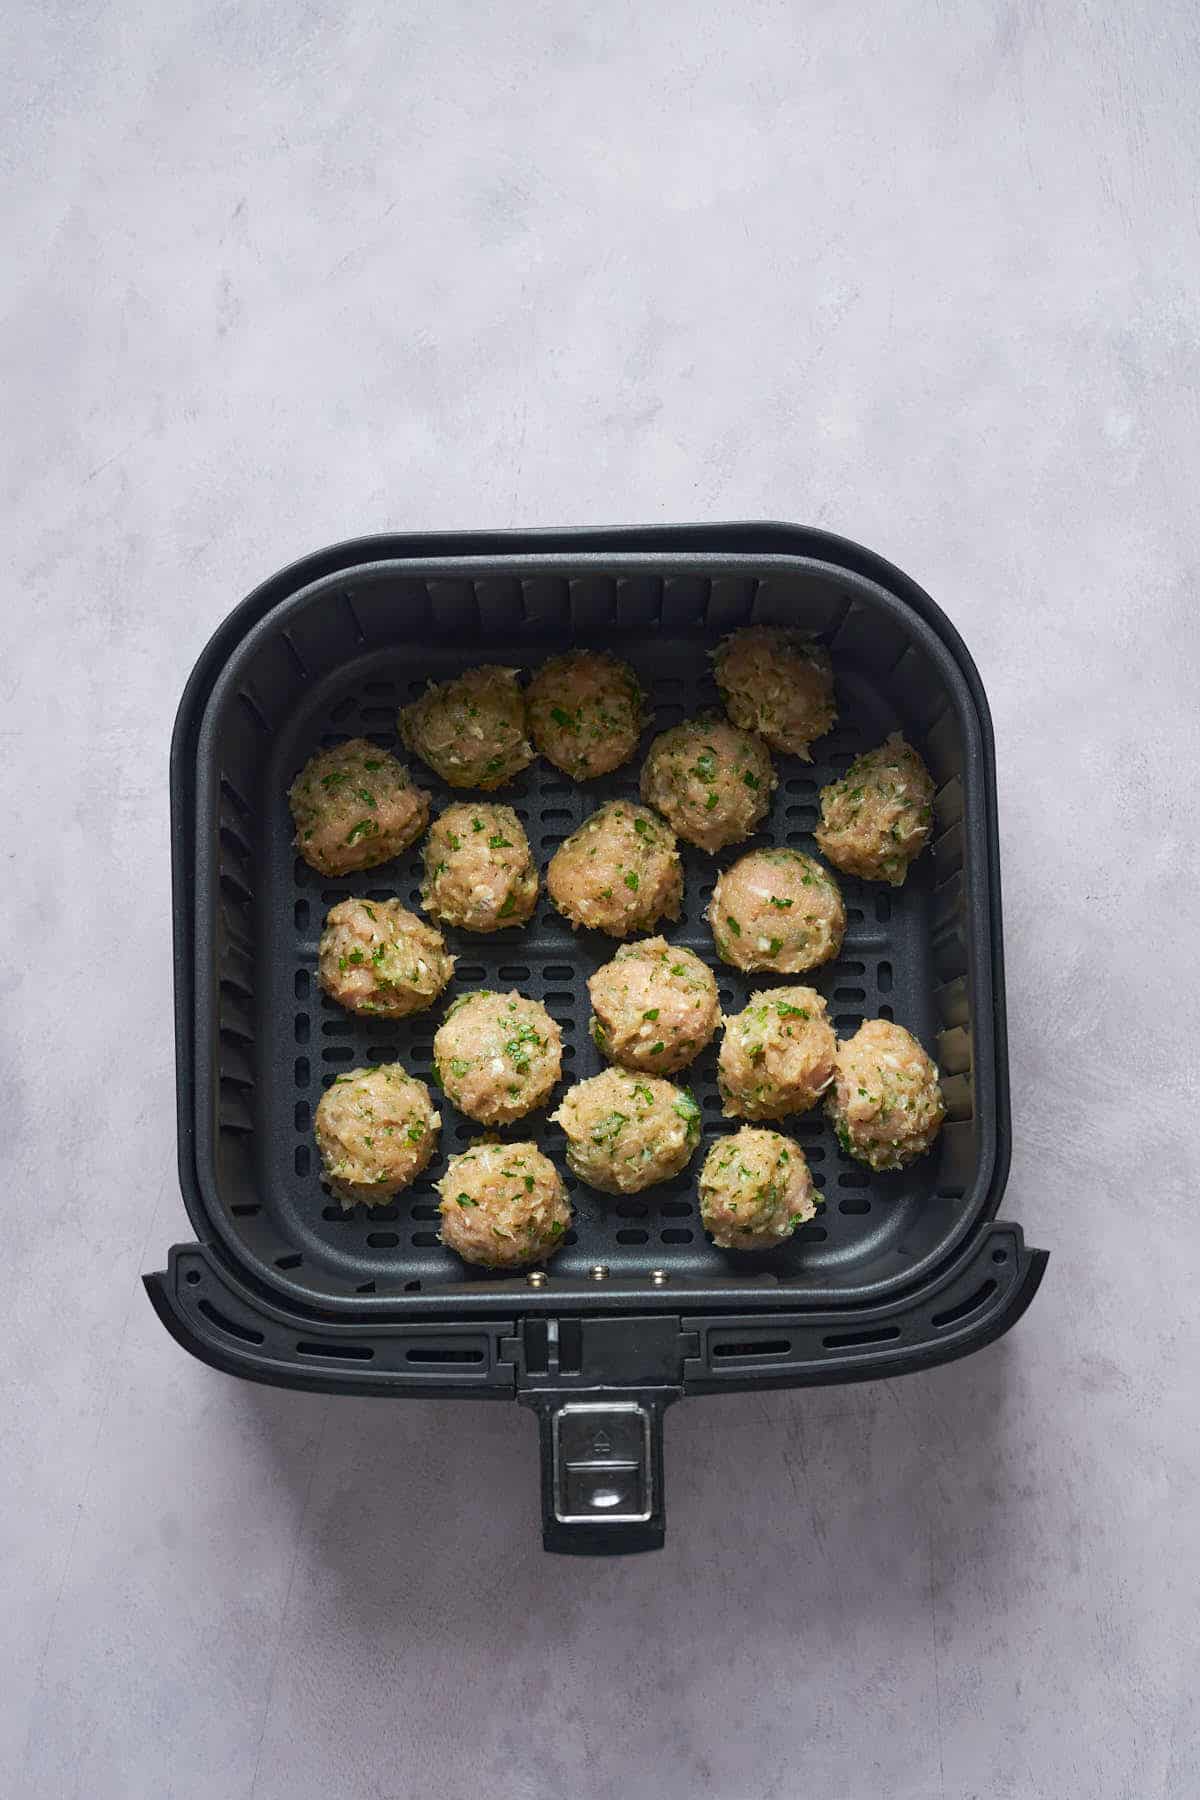 Uncooked turkey meatballs in the air fryer basket.